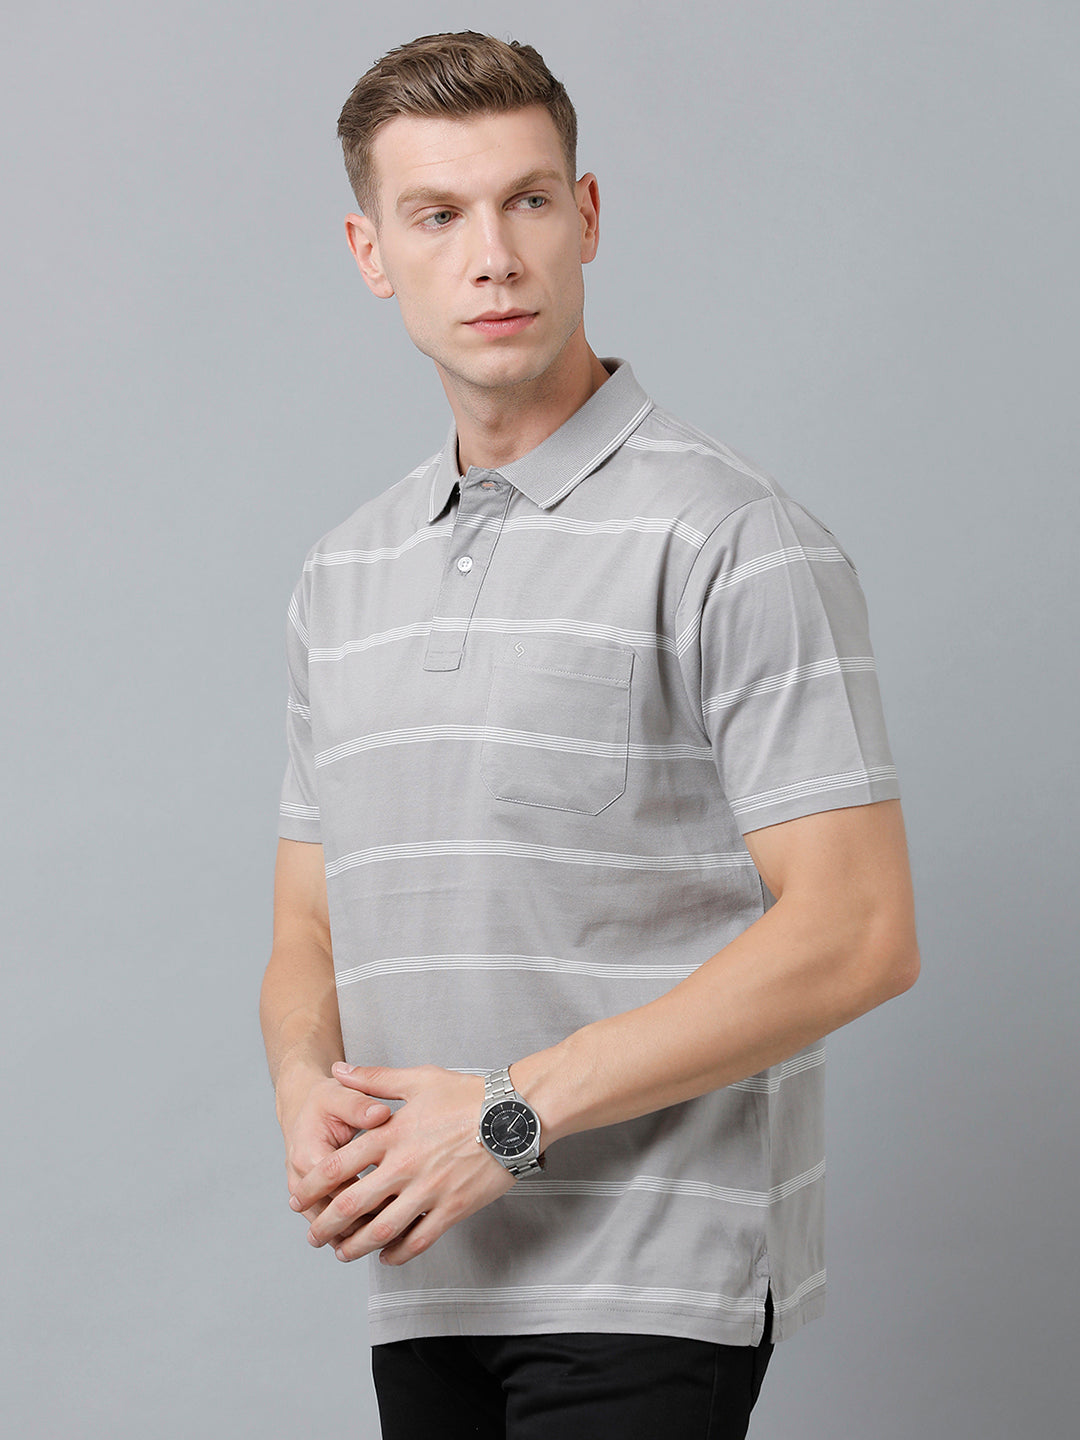 Classic Polo Men's Cotton Half Sleeve Striped Authentic Fit Polo Neck Grey Color T-Shirt | Ap - 83 A